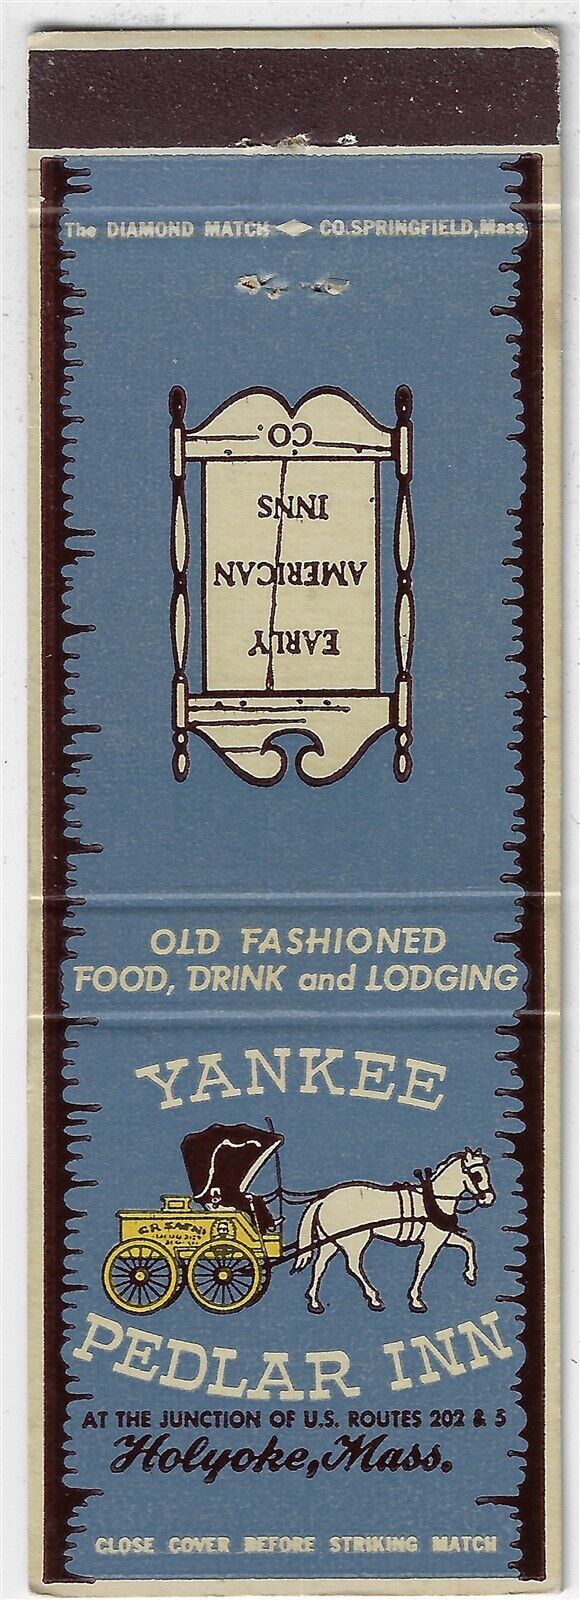 Yankee Pedlar Inn Holyoke Mass. Date 1951-60 FS Empty Matchcover